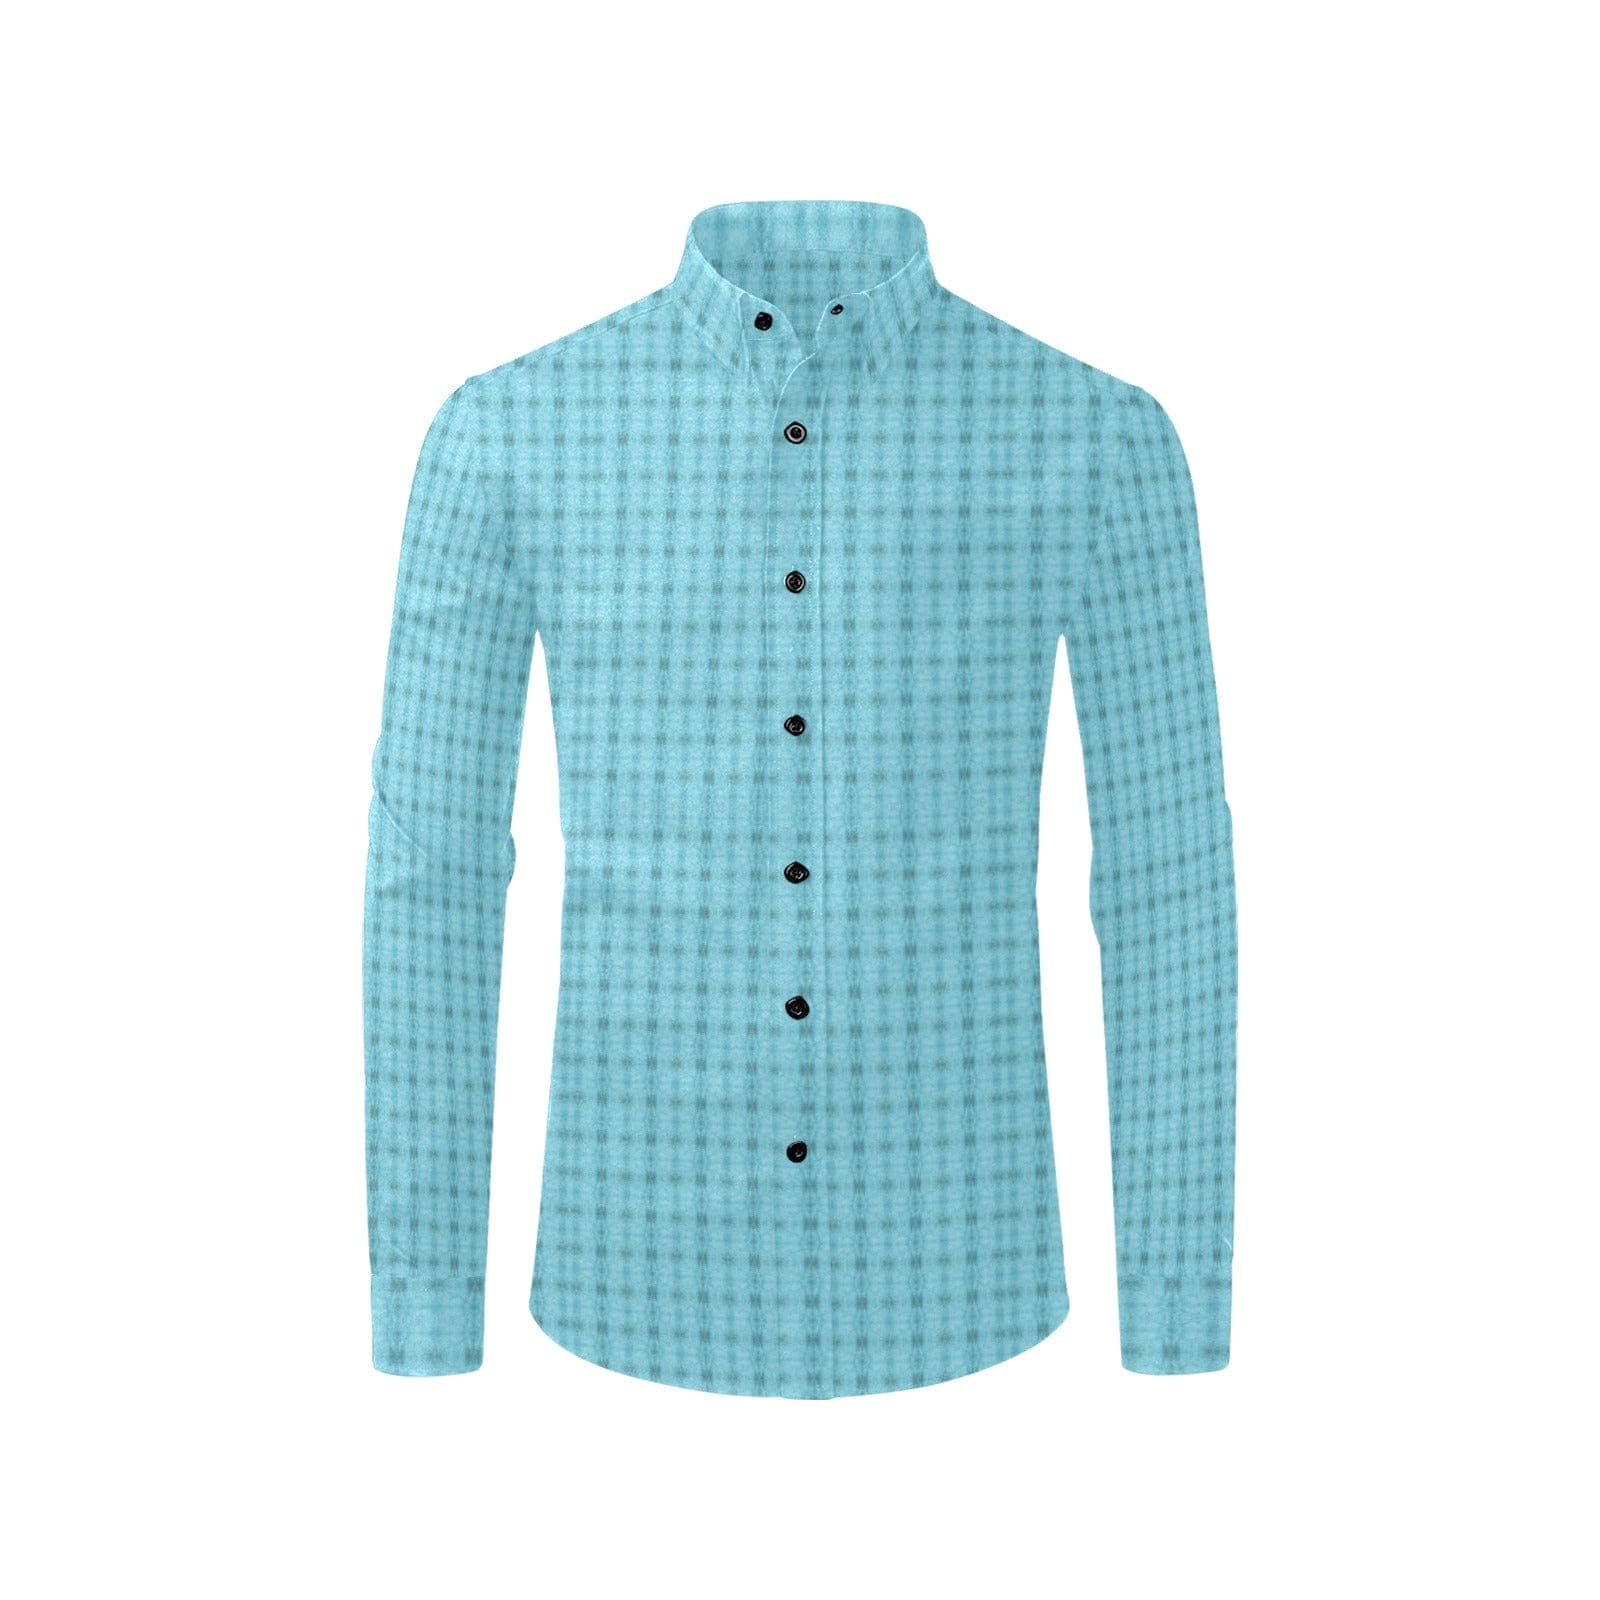 Light Blue Line Patterned Easy Fit Longsleeve Shirt for Men Men's All Over Print Long Sleeve Shirt (Without Pocket)